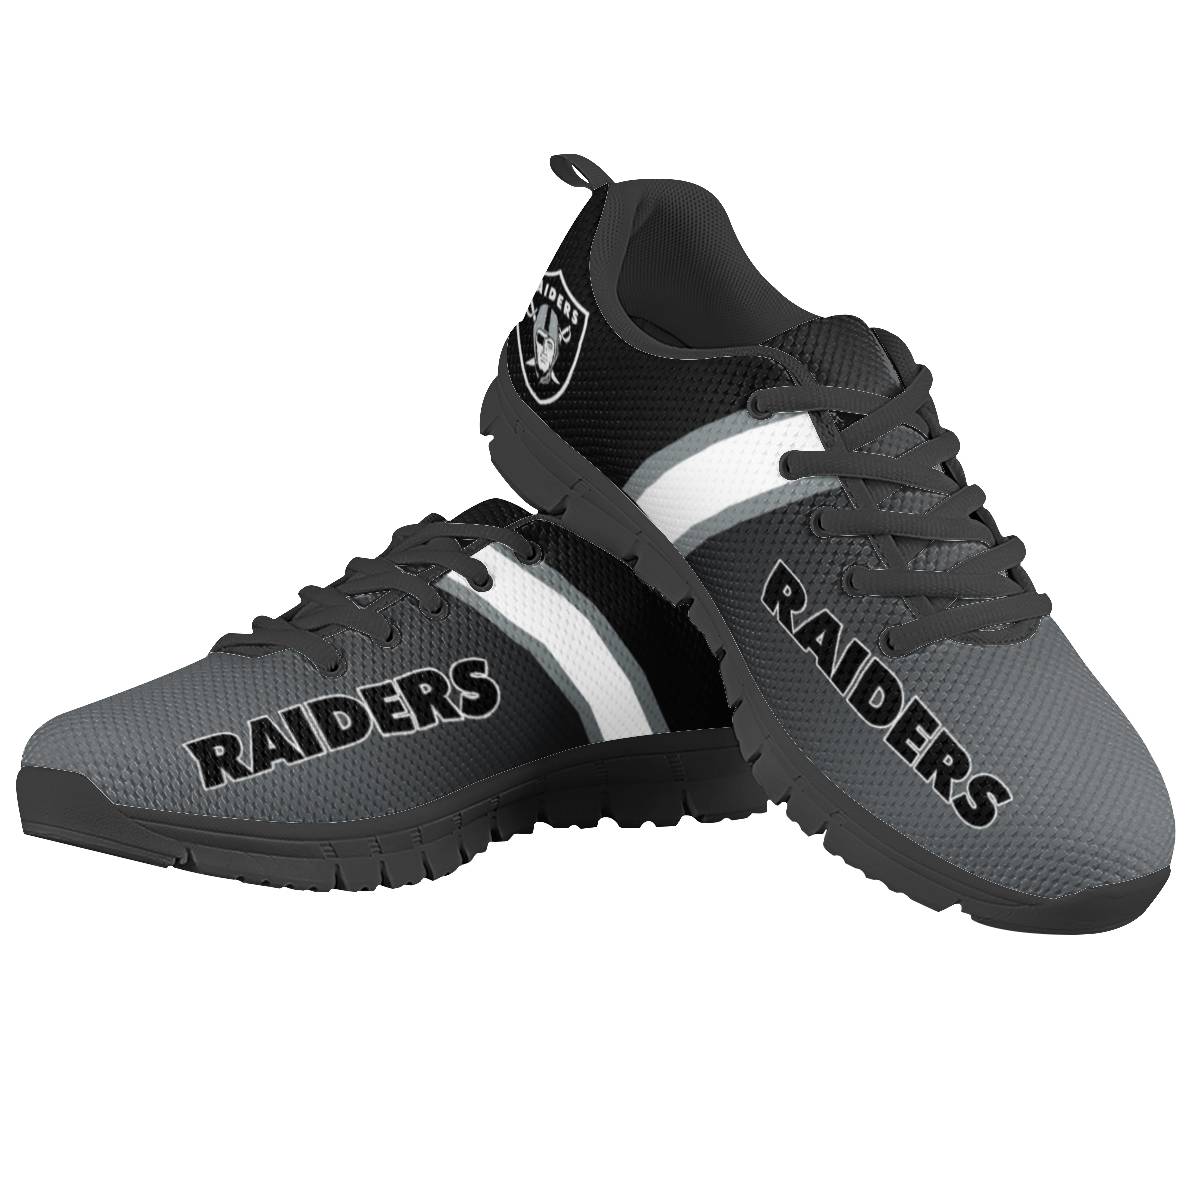 Men's Las Vegas Raiders AQ Running Shoes 003